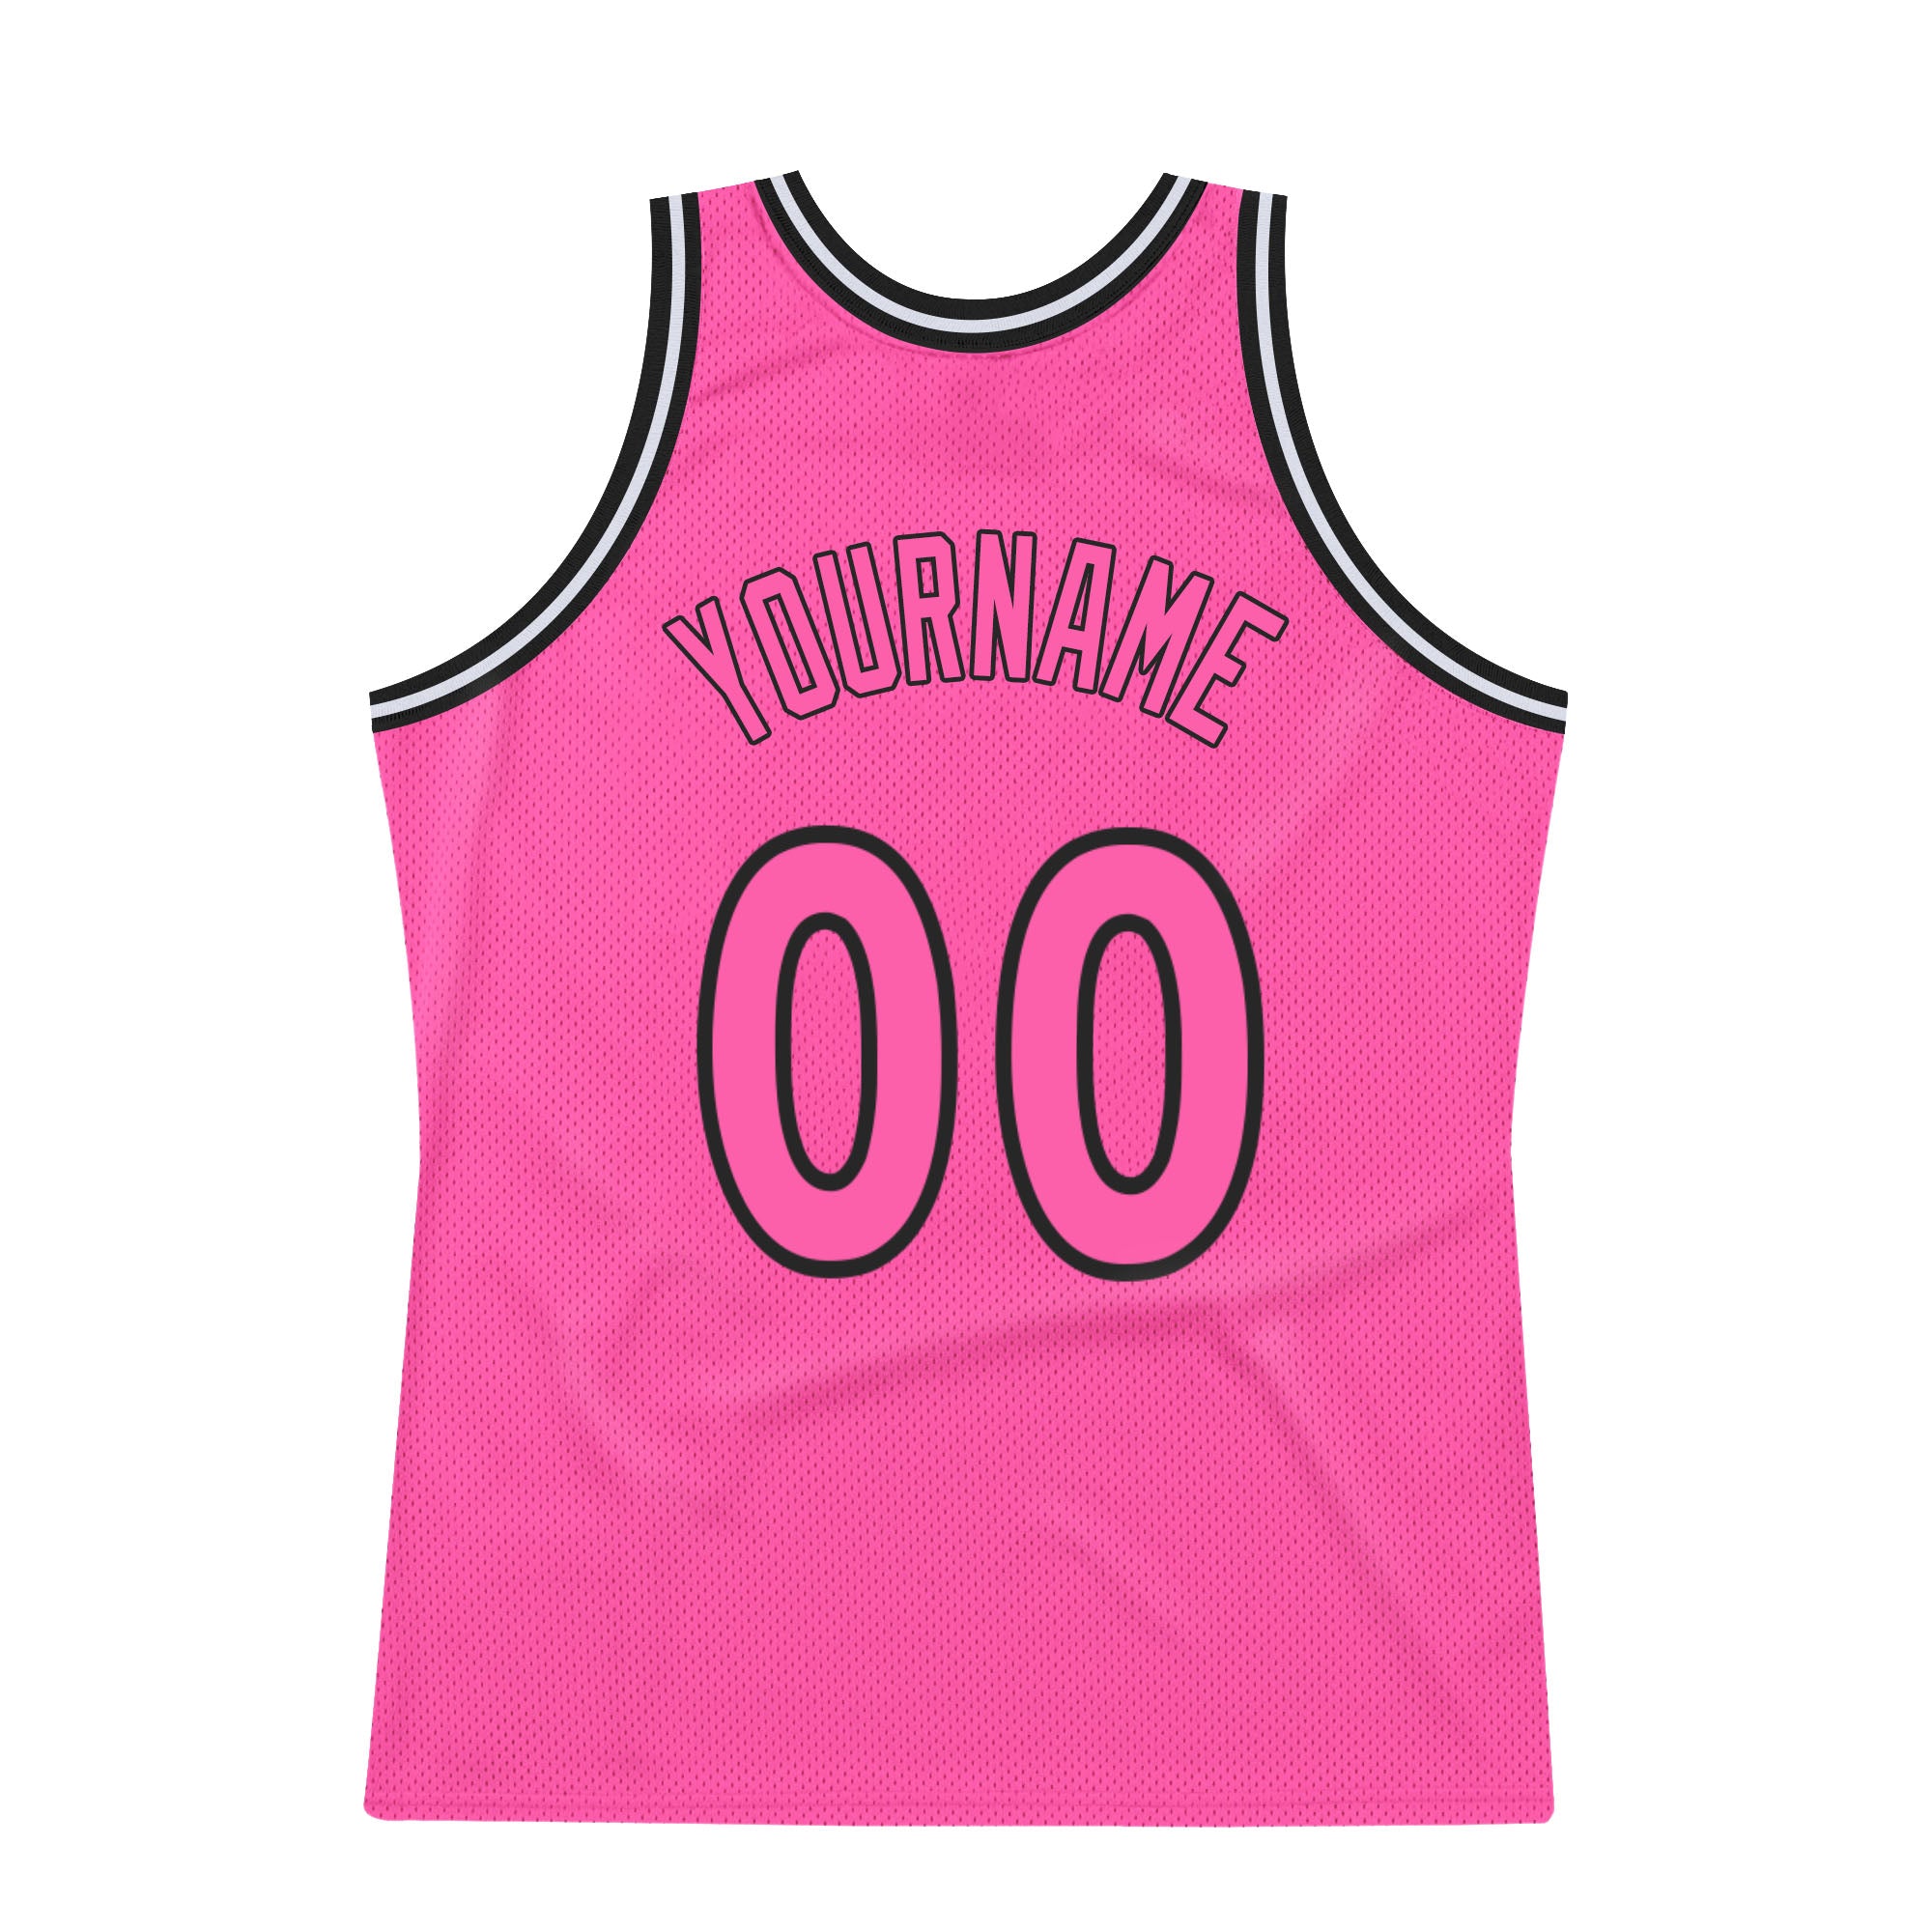 FANSIDEA Custom Light Blue White Pinstripe Pink-Black Authentic Basketball Jersey Youth Size:XL